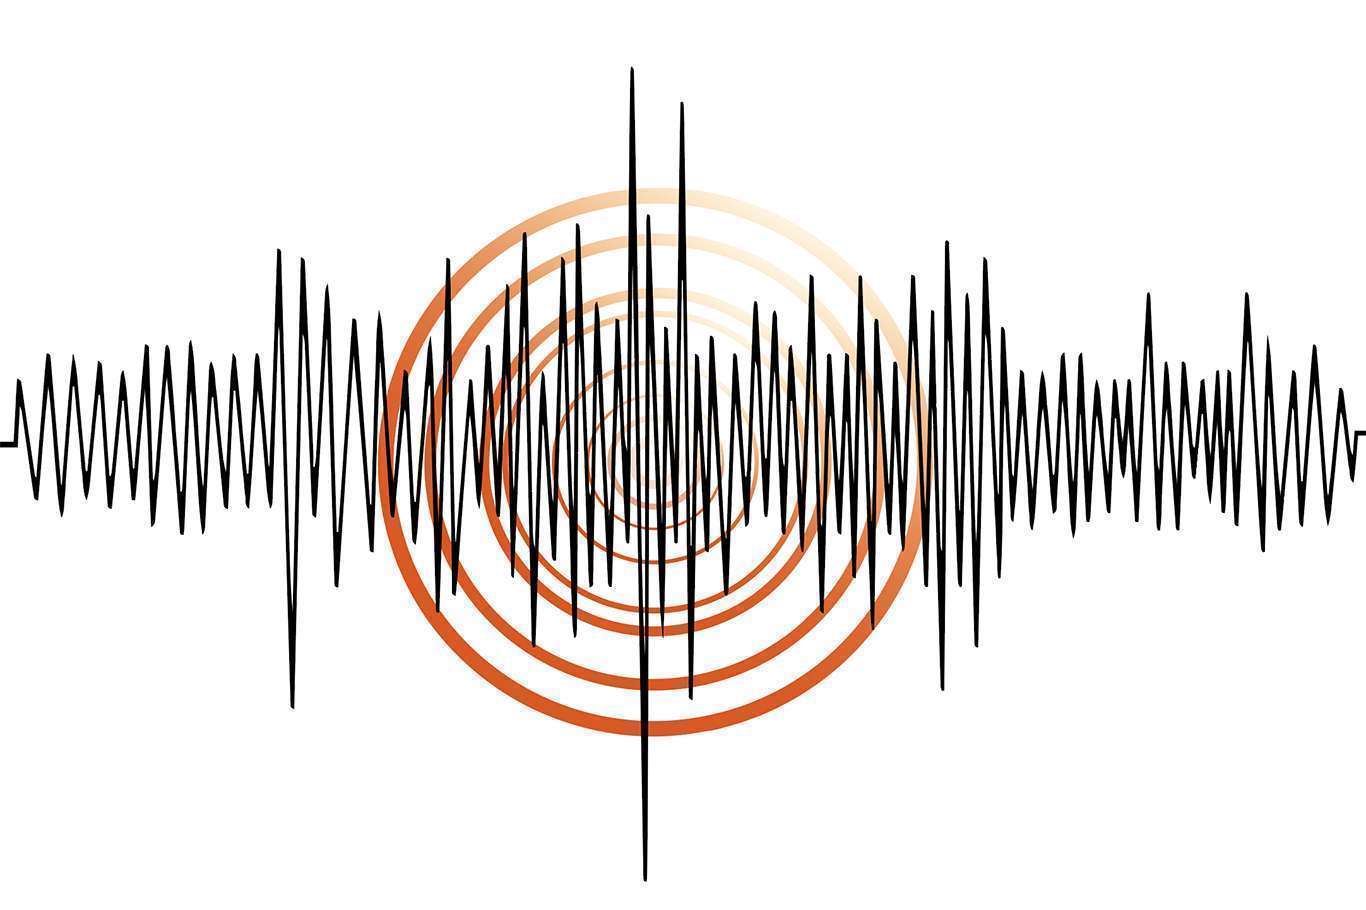 A 3.9 magnitude earthquake strikes southwestern Turkey